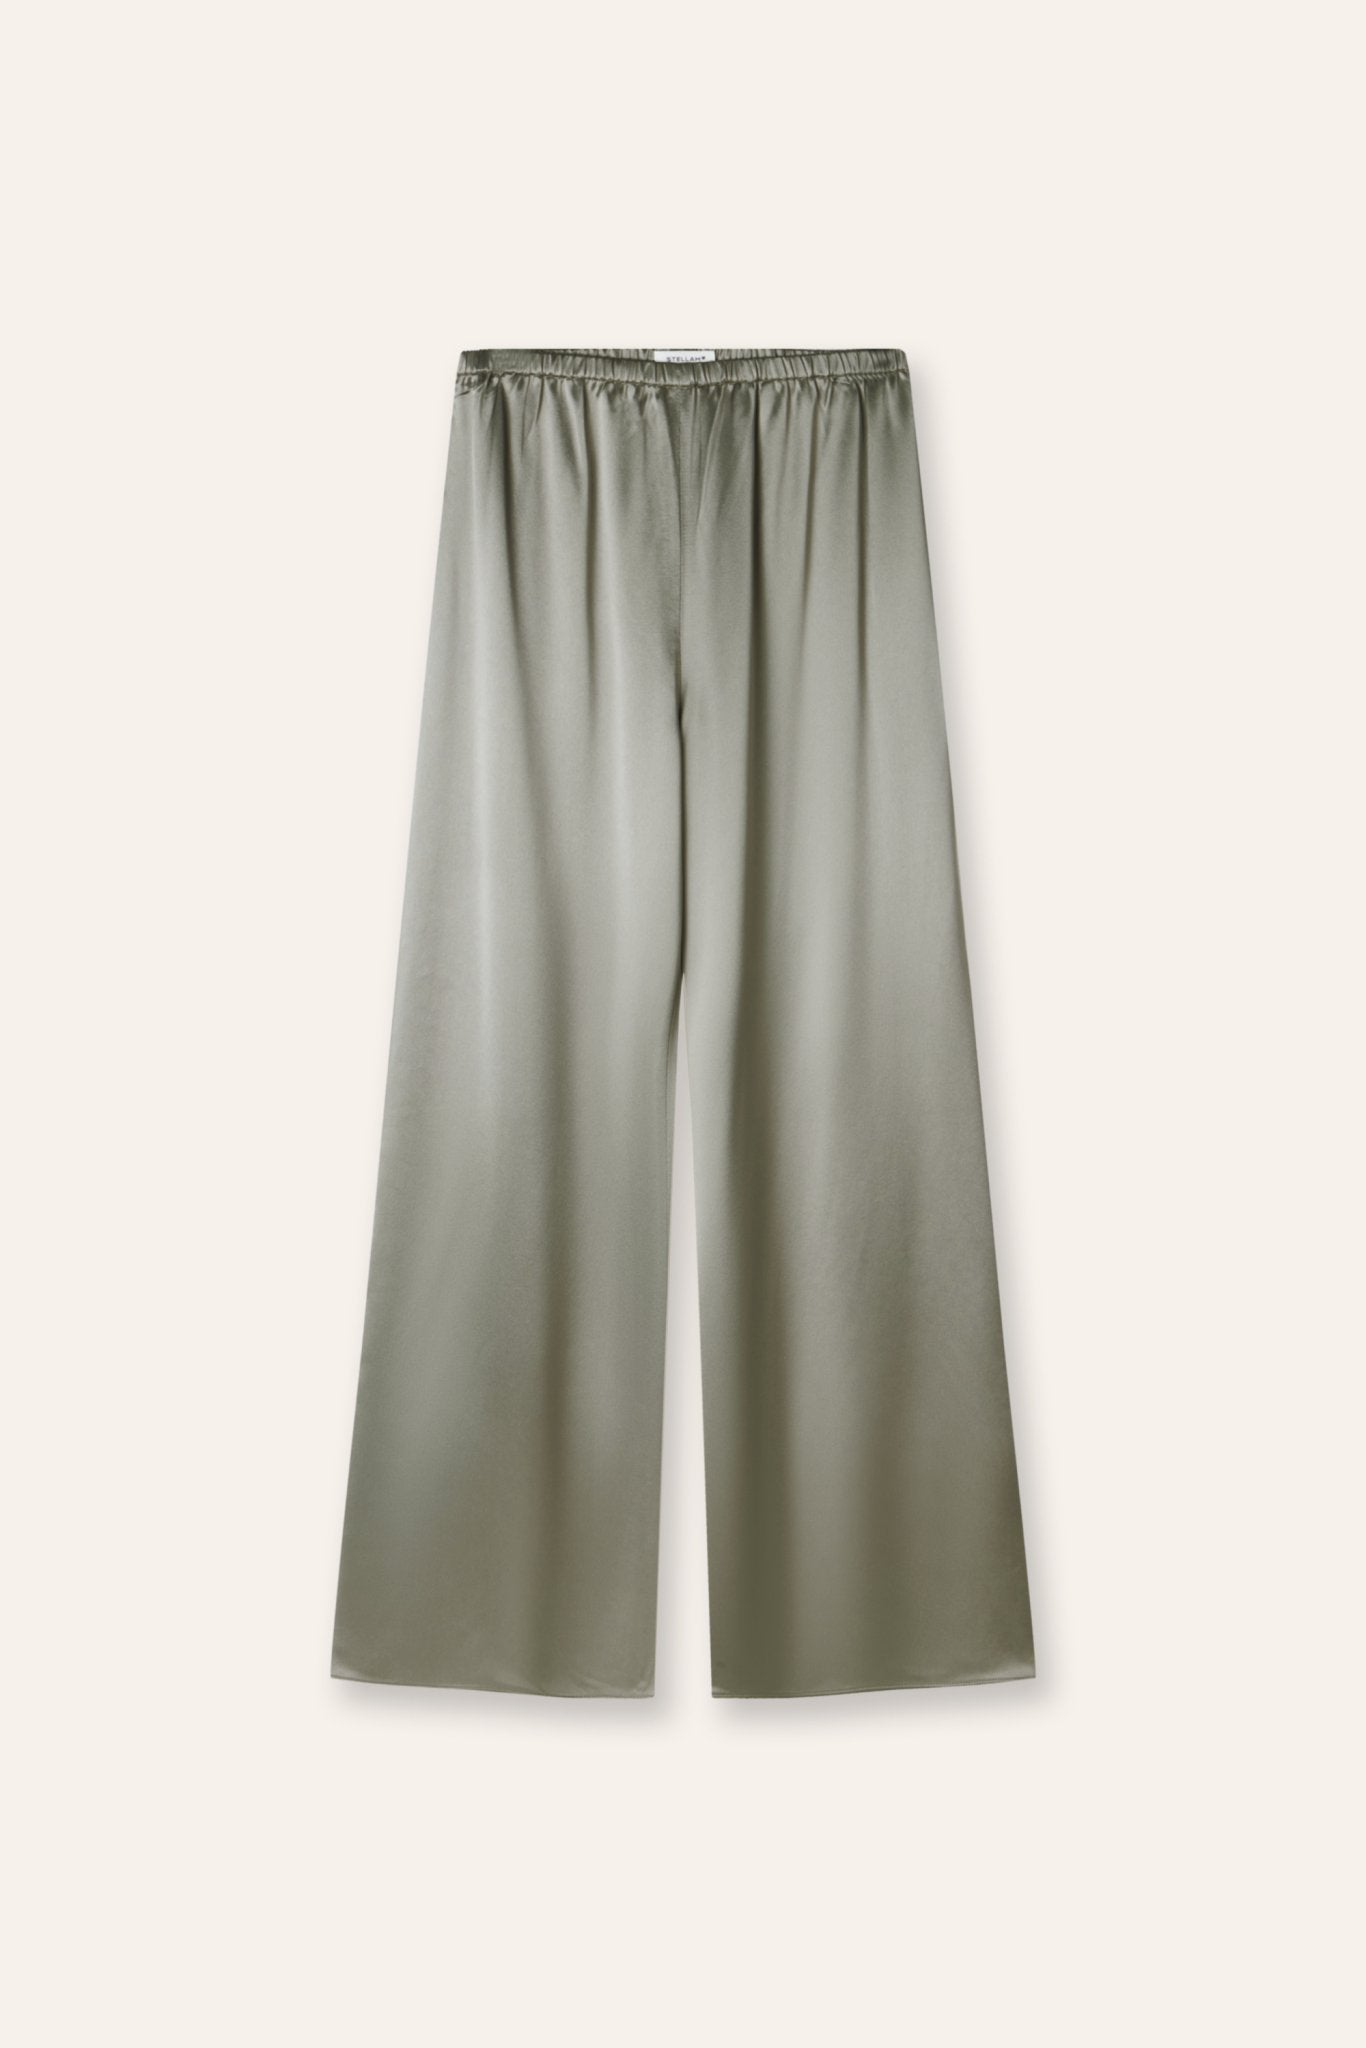 GALA drape wide pants (Seaweed) - STELLAM